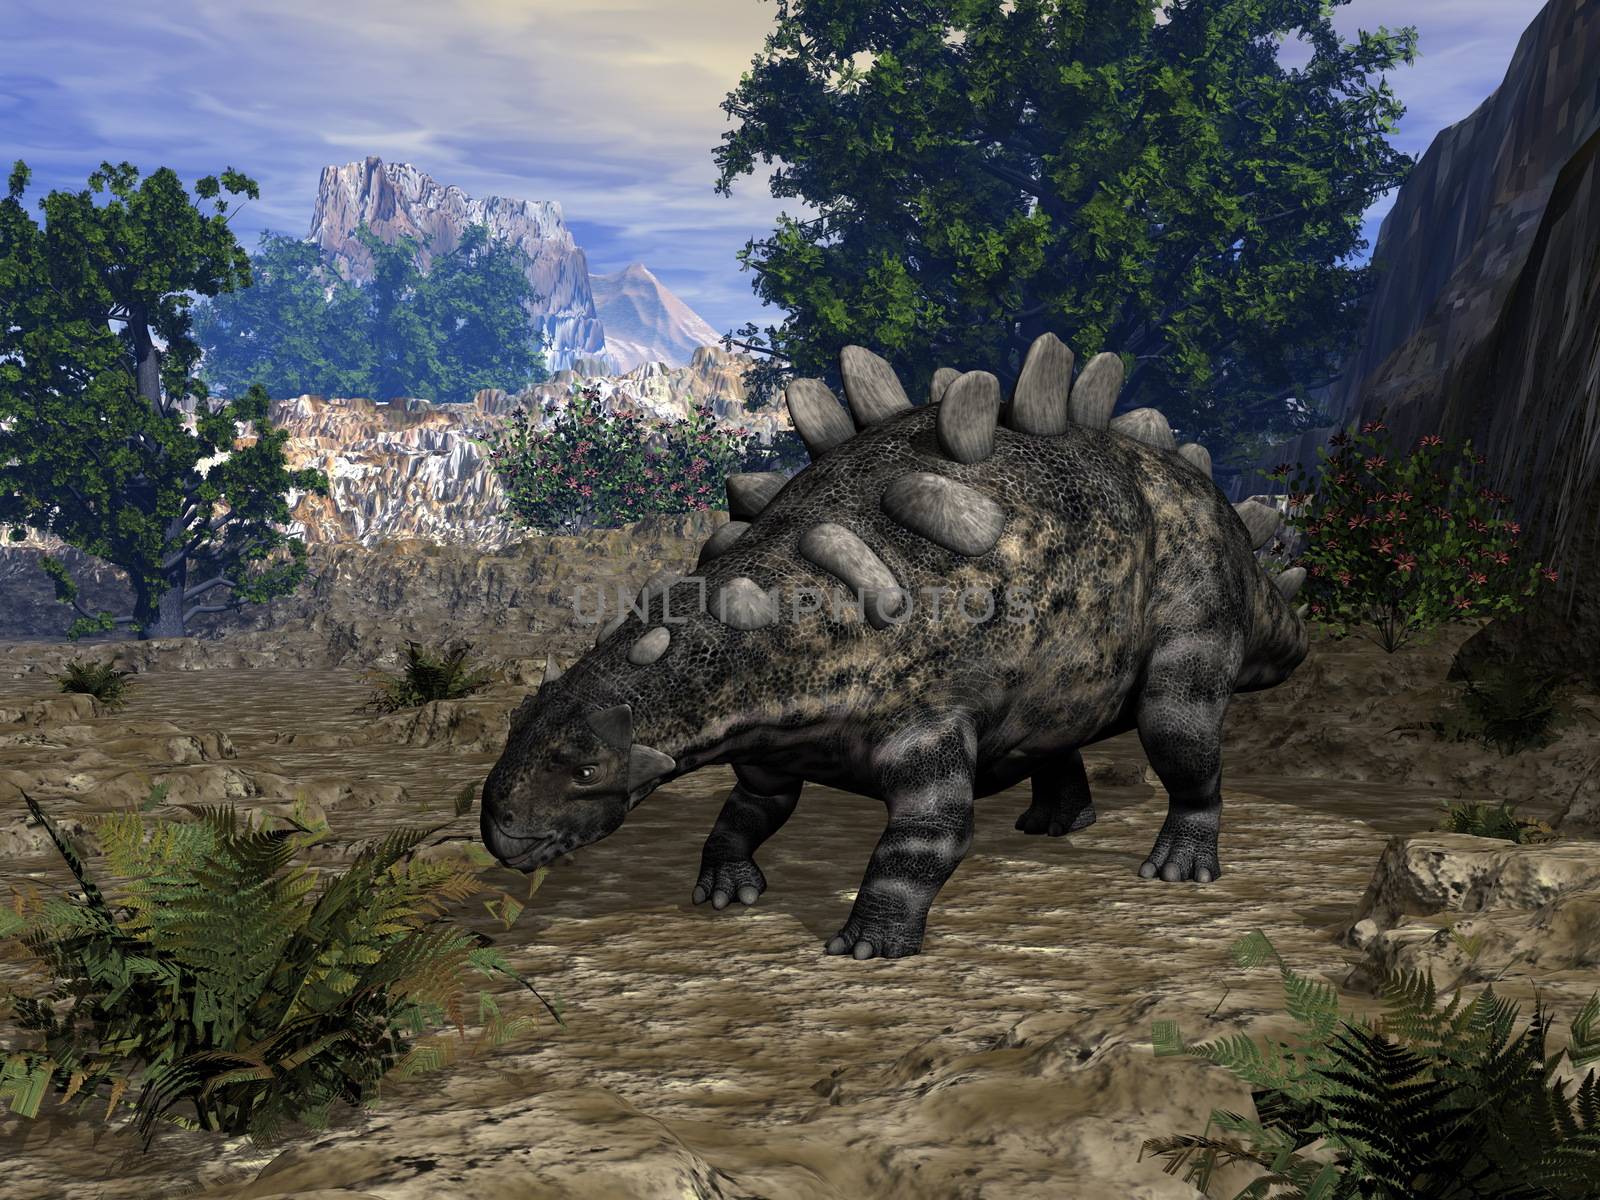 Chrichtonsaurus dinosaur - 3D render by Elenaphotos21